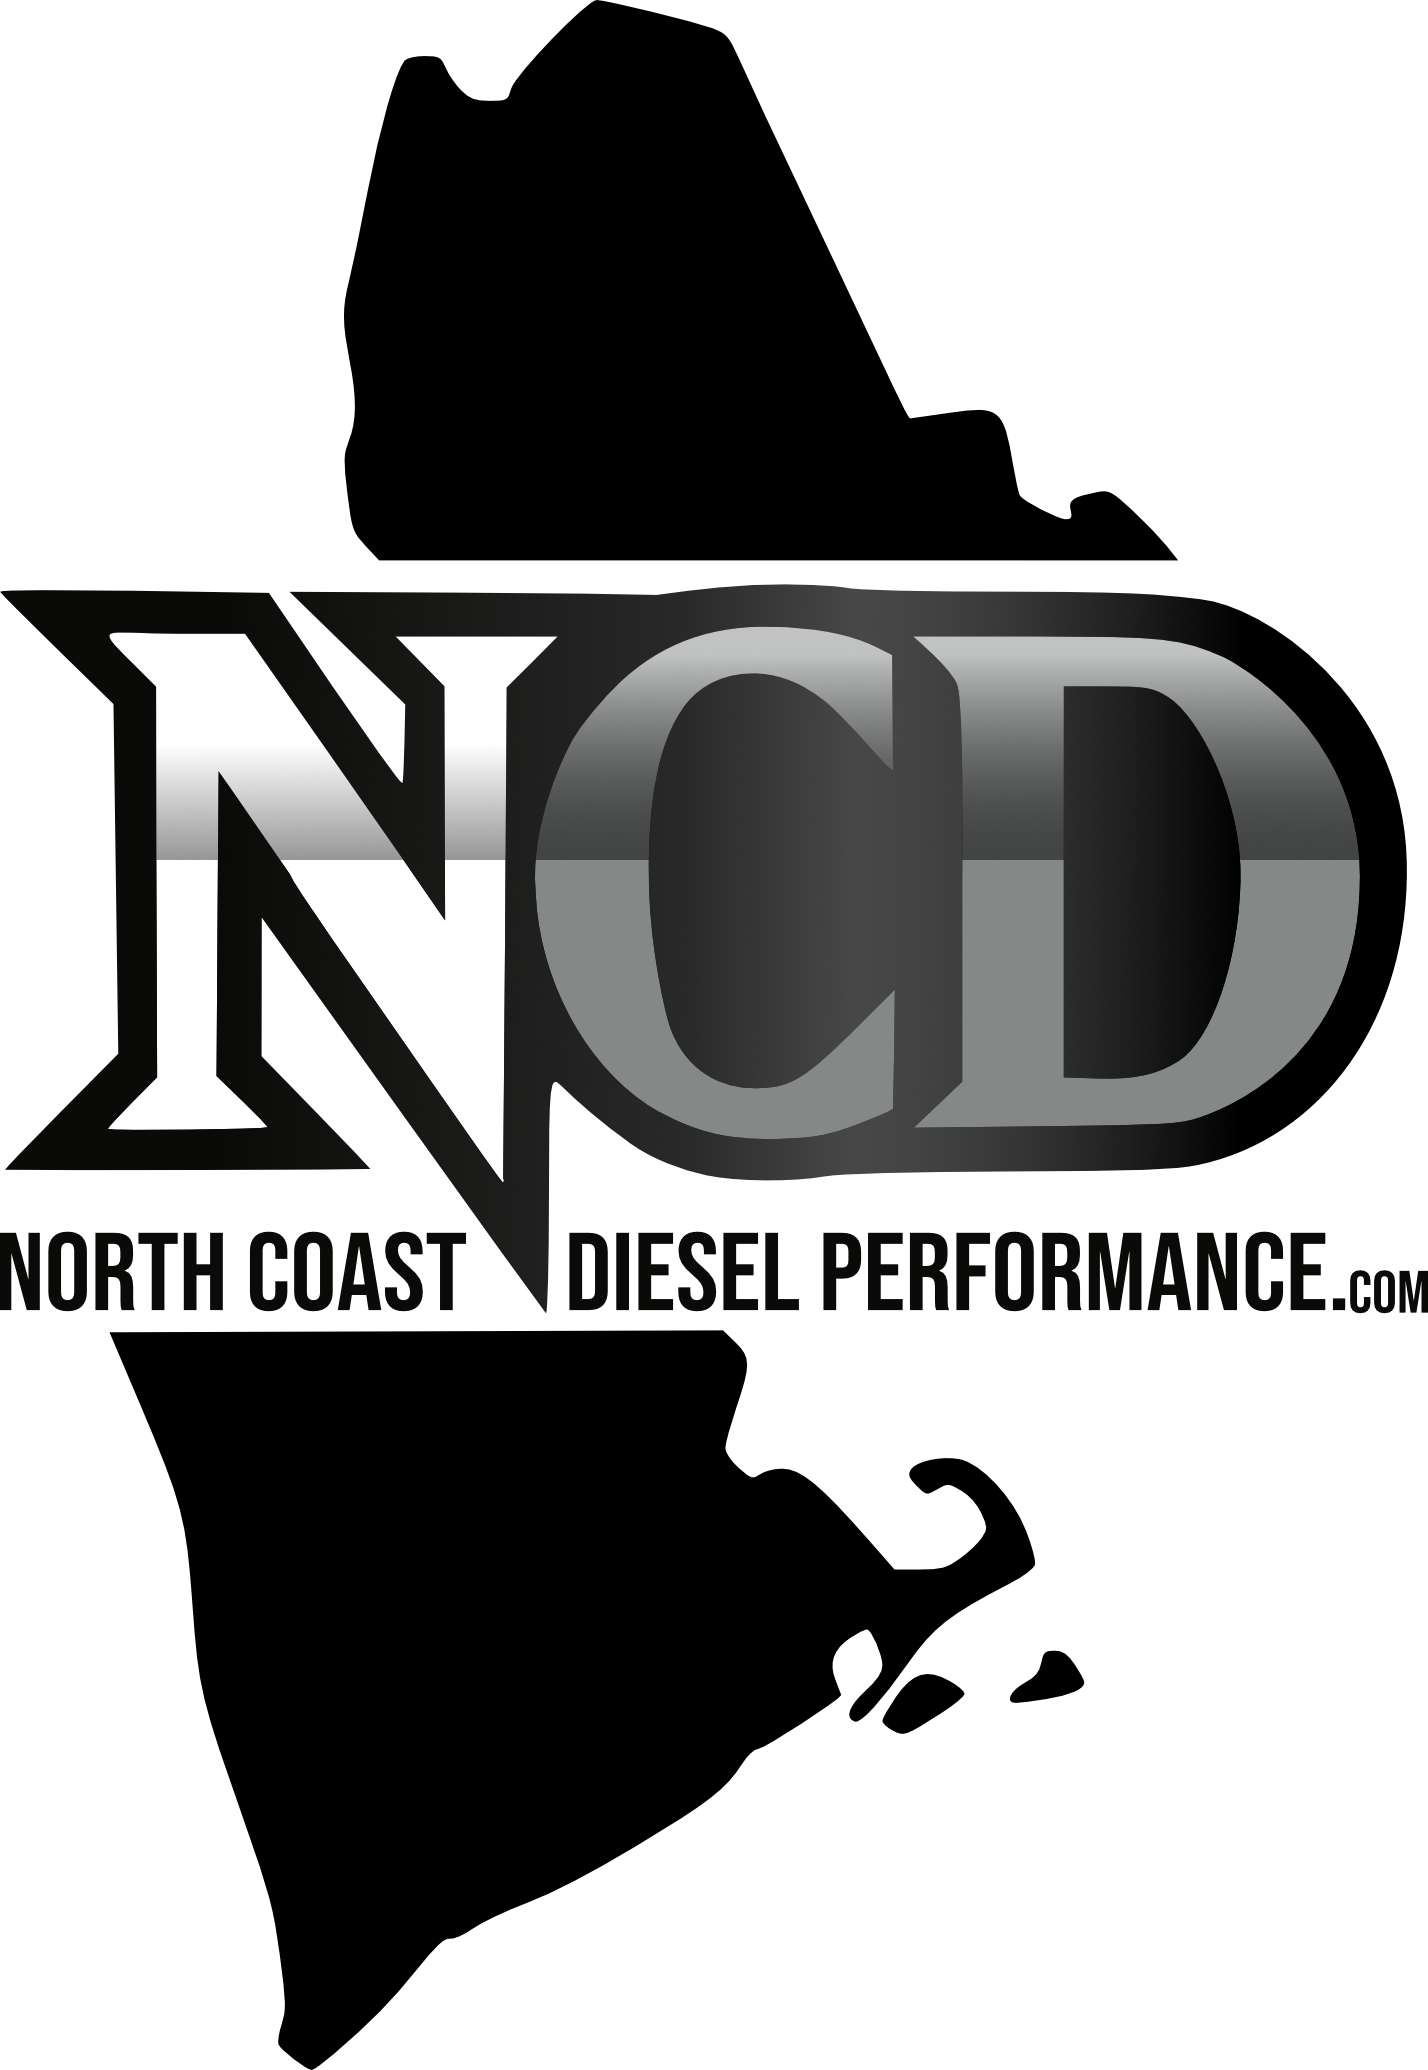 NCD Converter Core